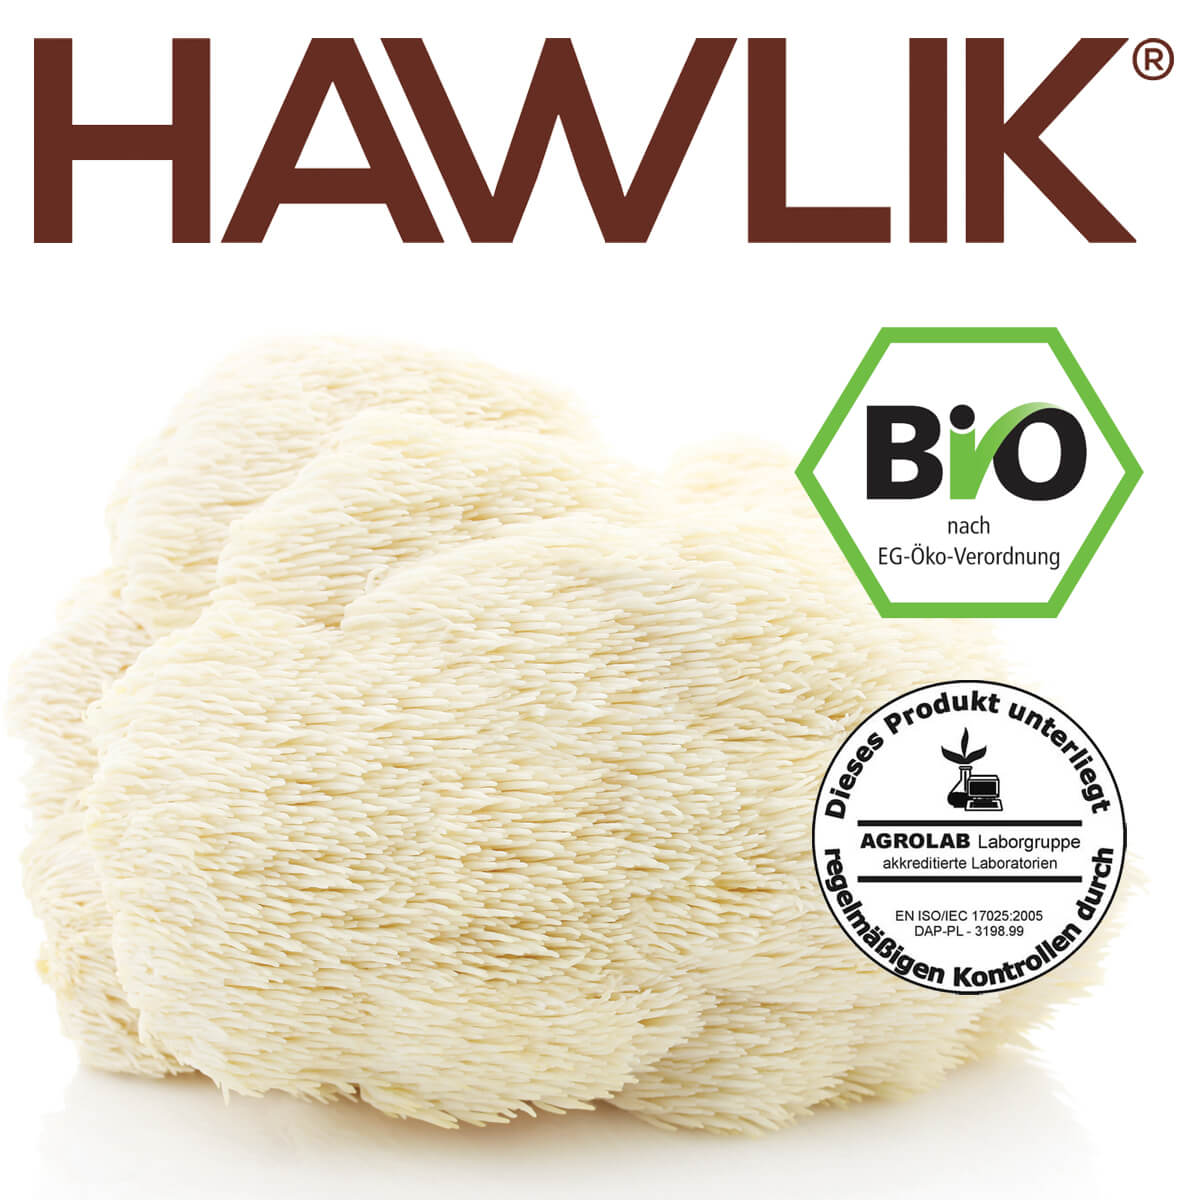 Hawlik ist biozertifiziert